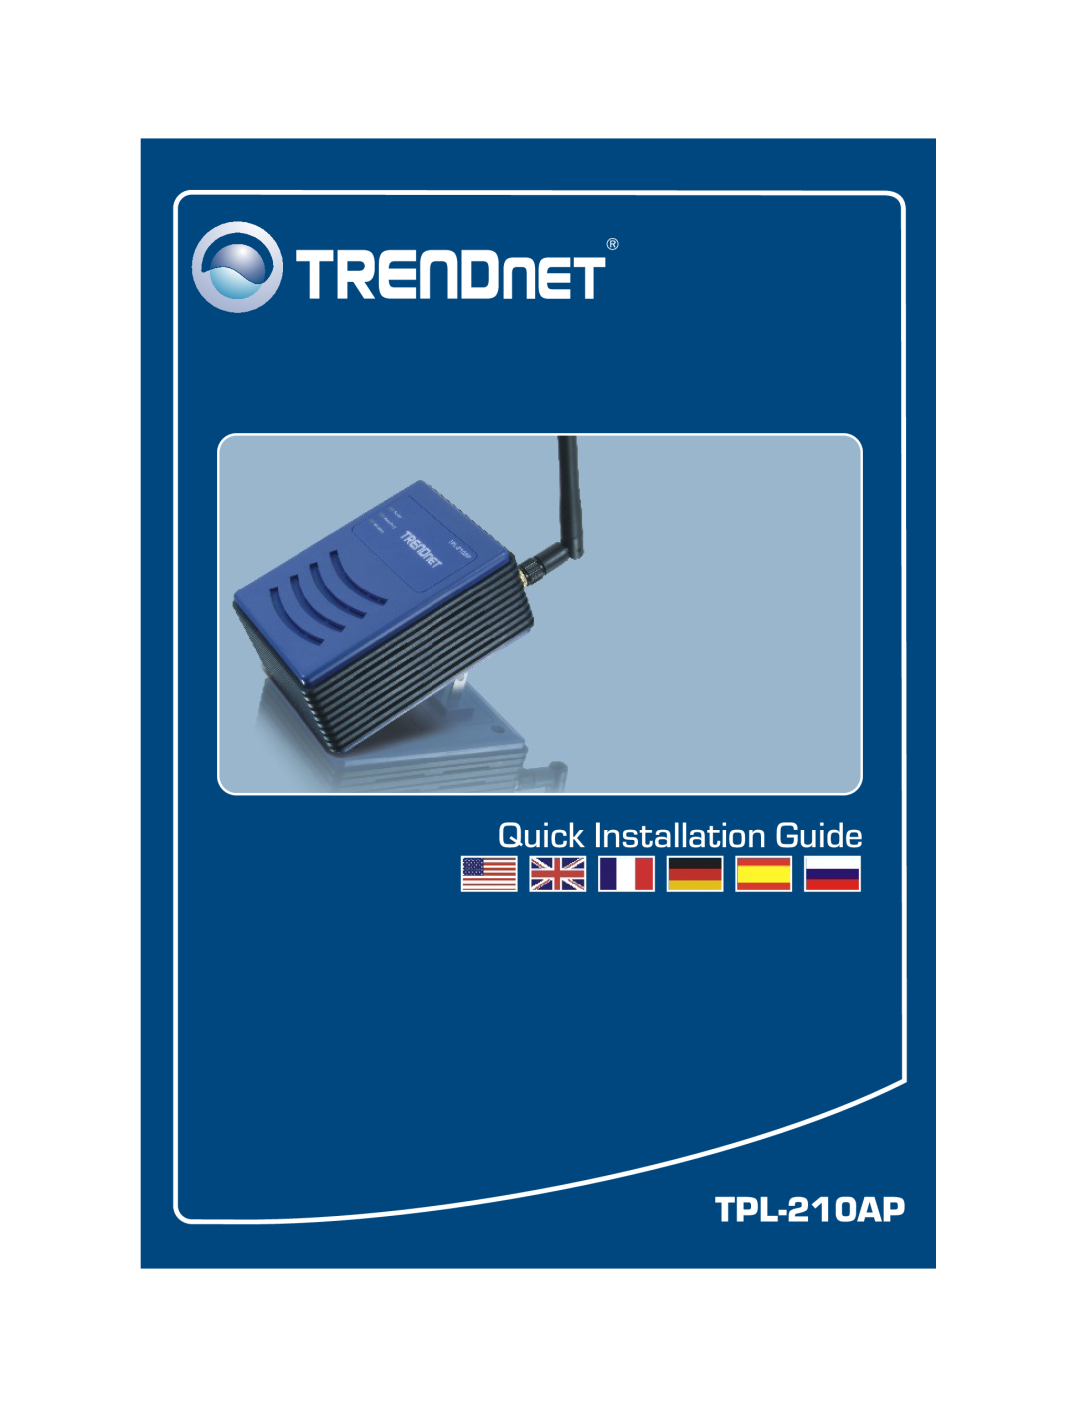 TRENDnet TPL-210AP manual Quick Installation Guide 